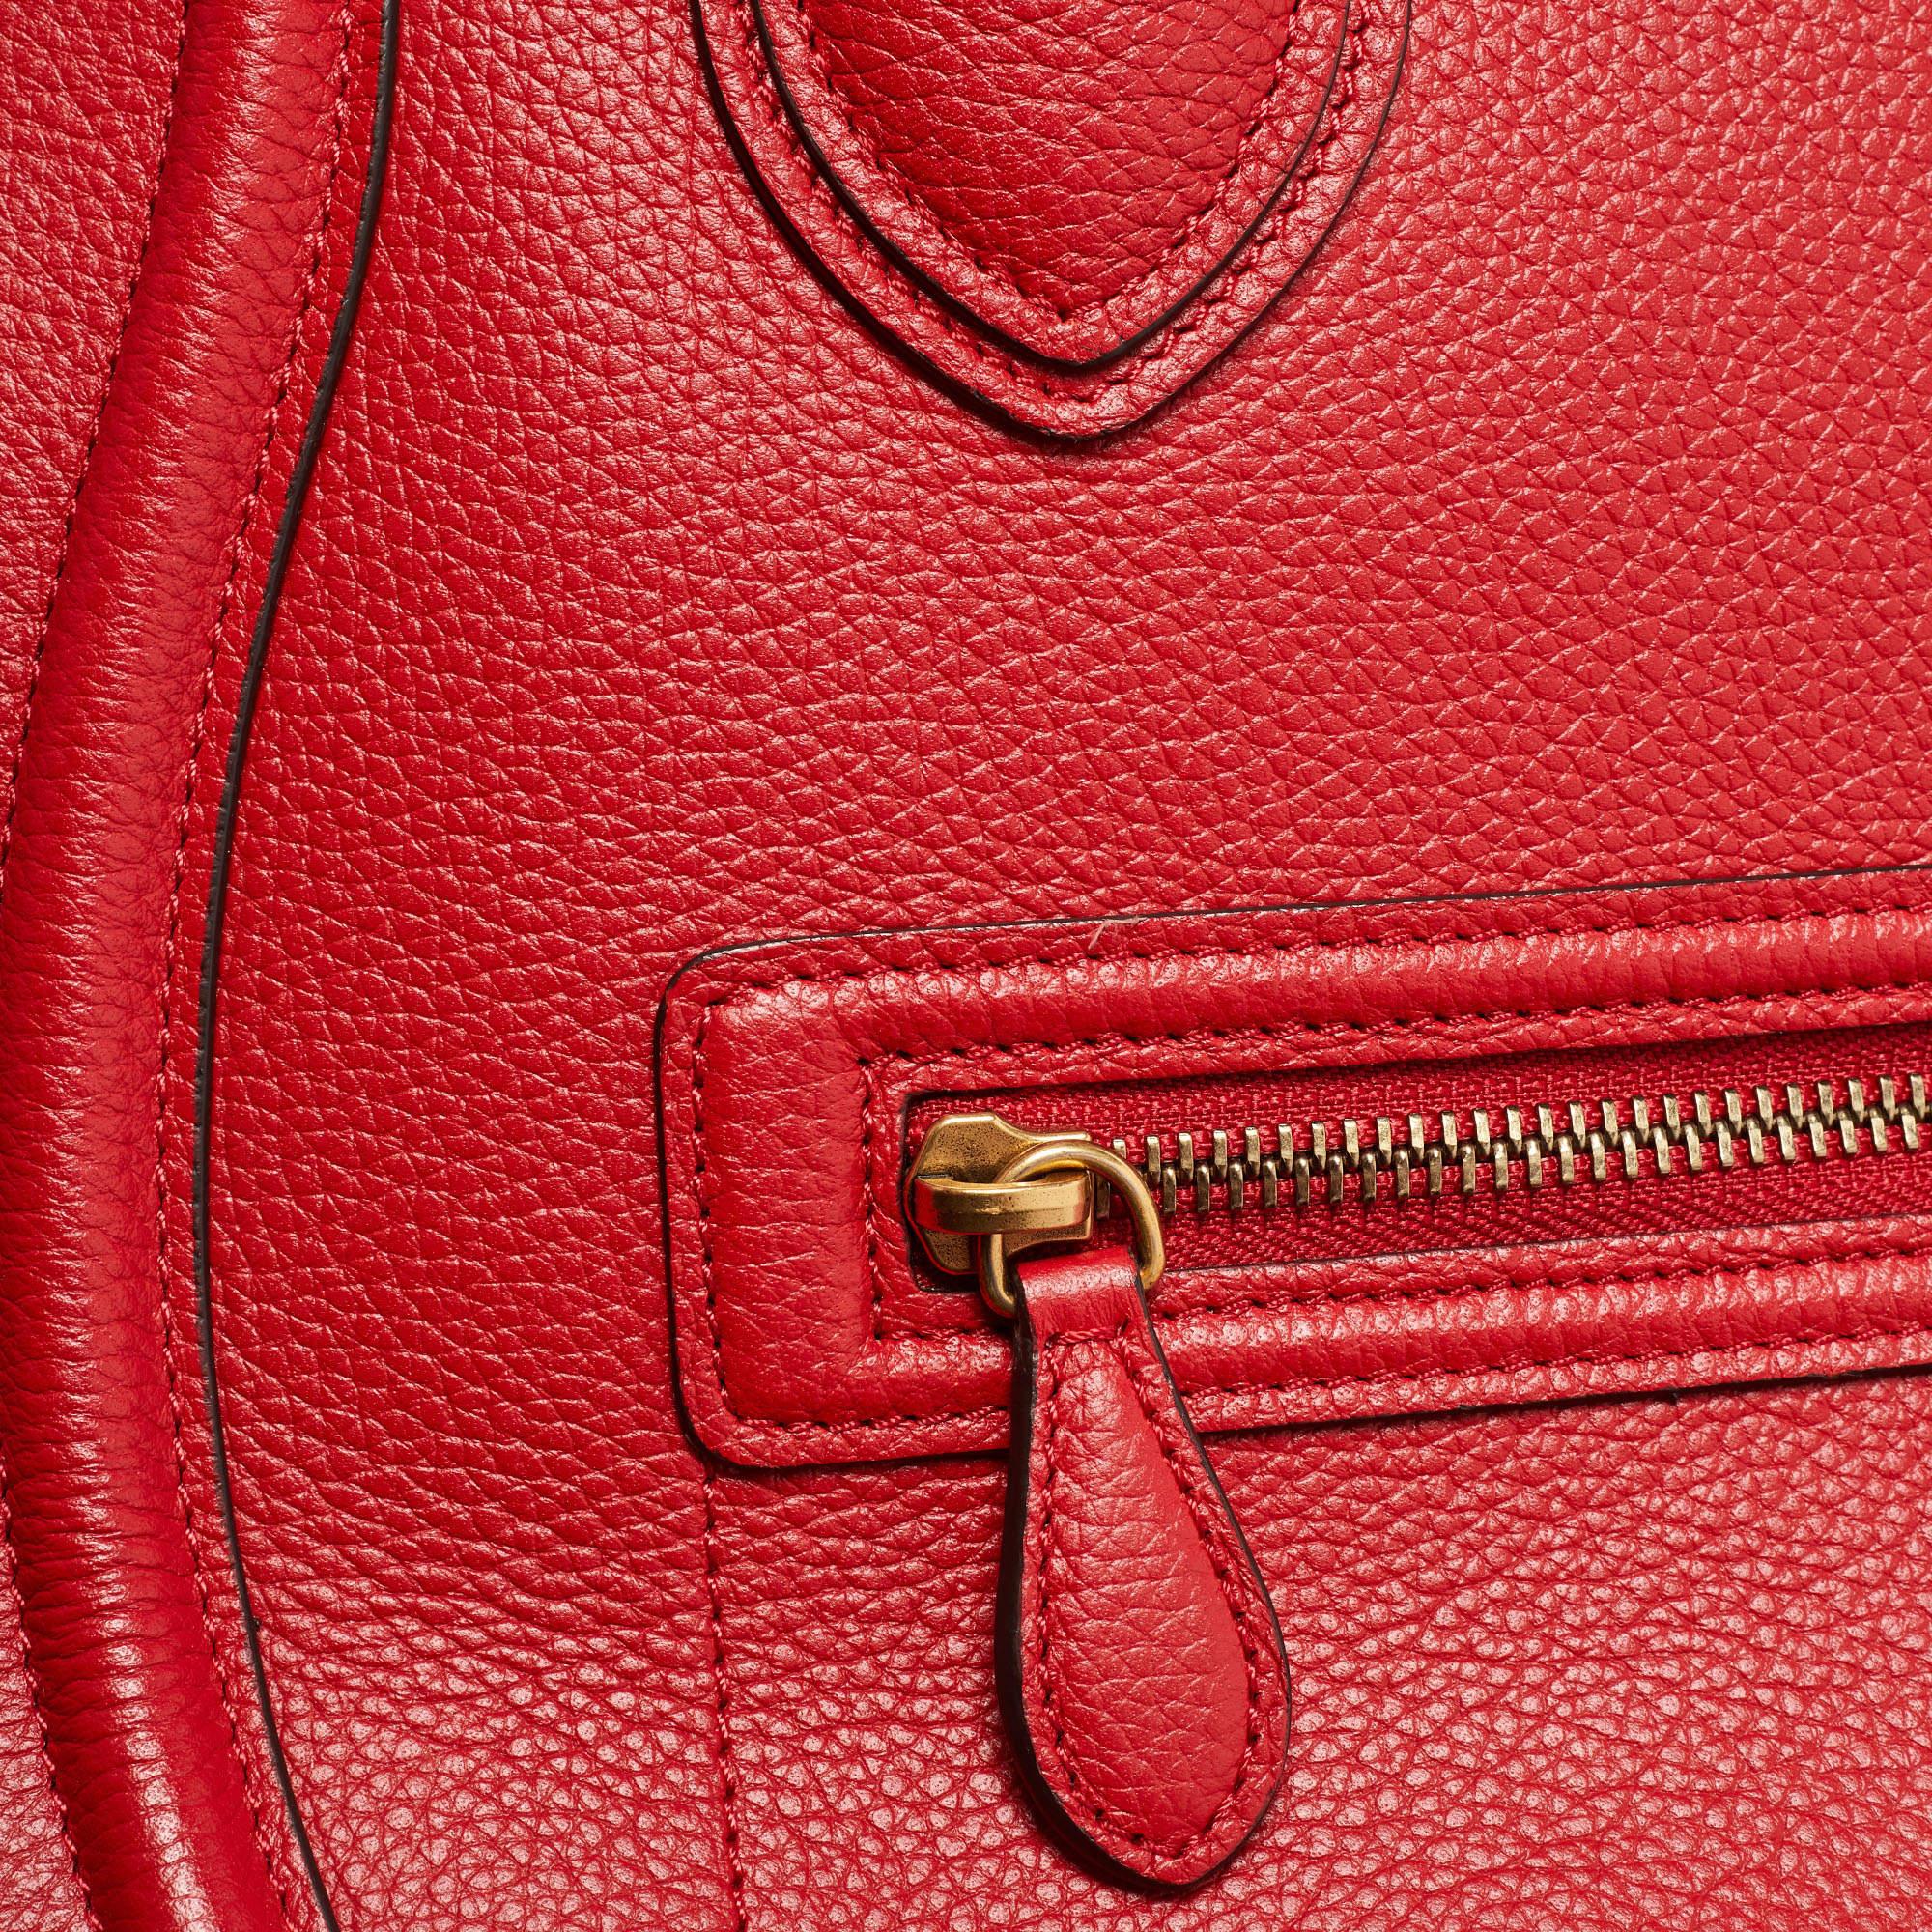 Celine Red Leather Mini Luggage Tote 2